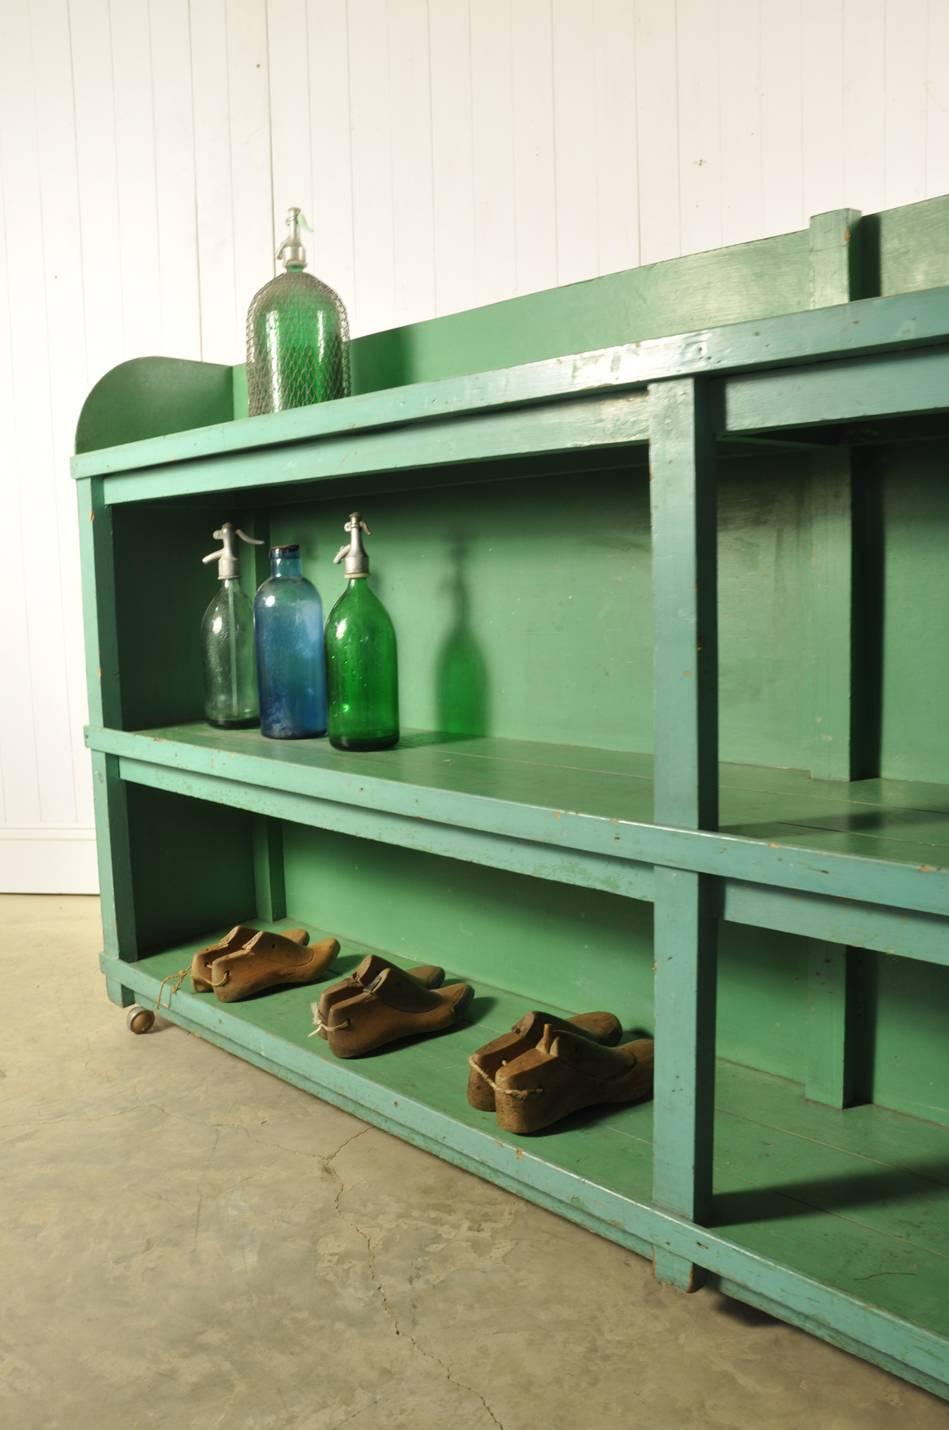 Czech Vintage Green Industrial Shelving Unit